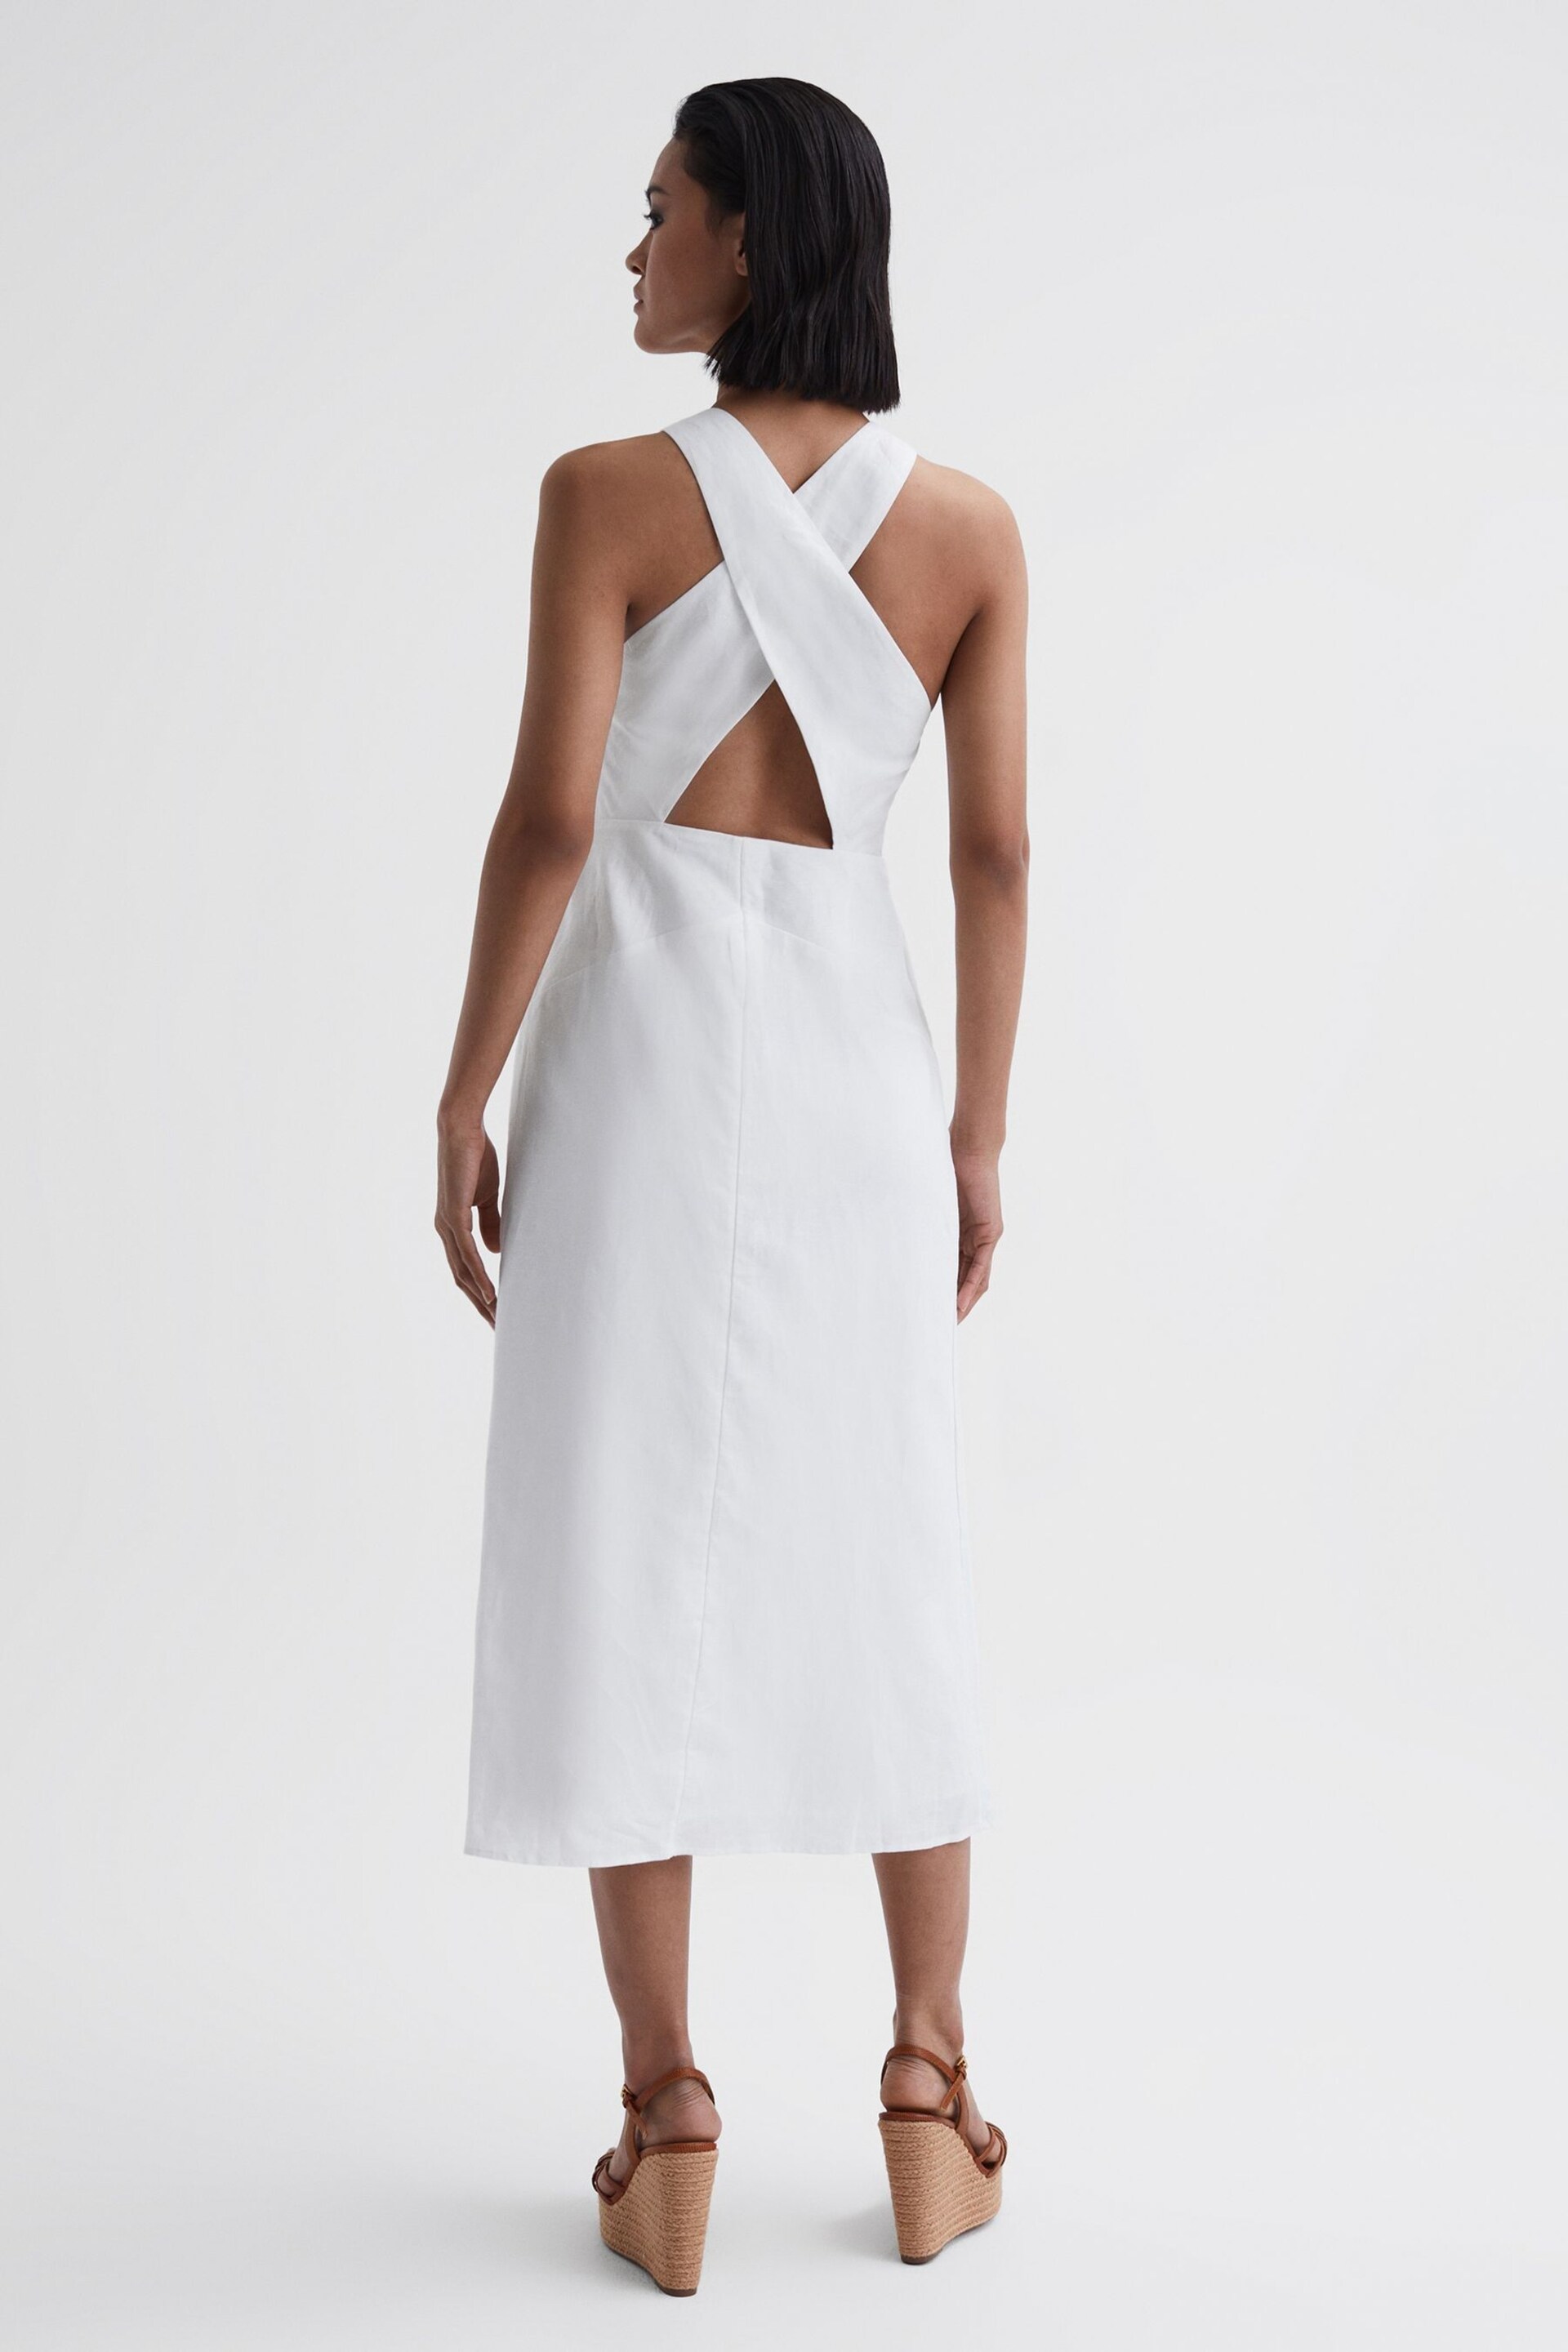 Reiss Ivory Rhoda Cotton-Linen Midi Dress - Image 4 of 5